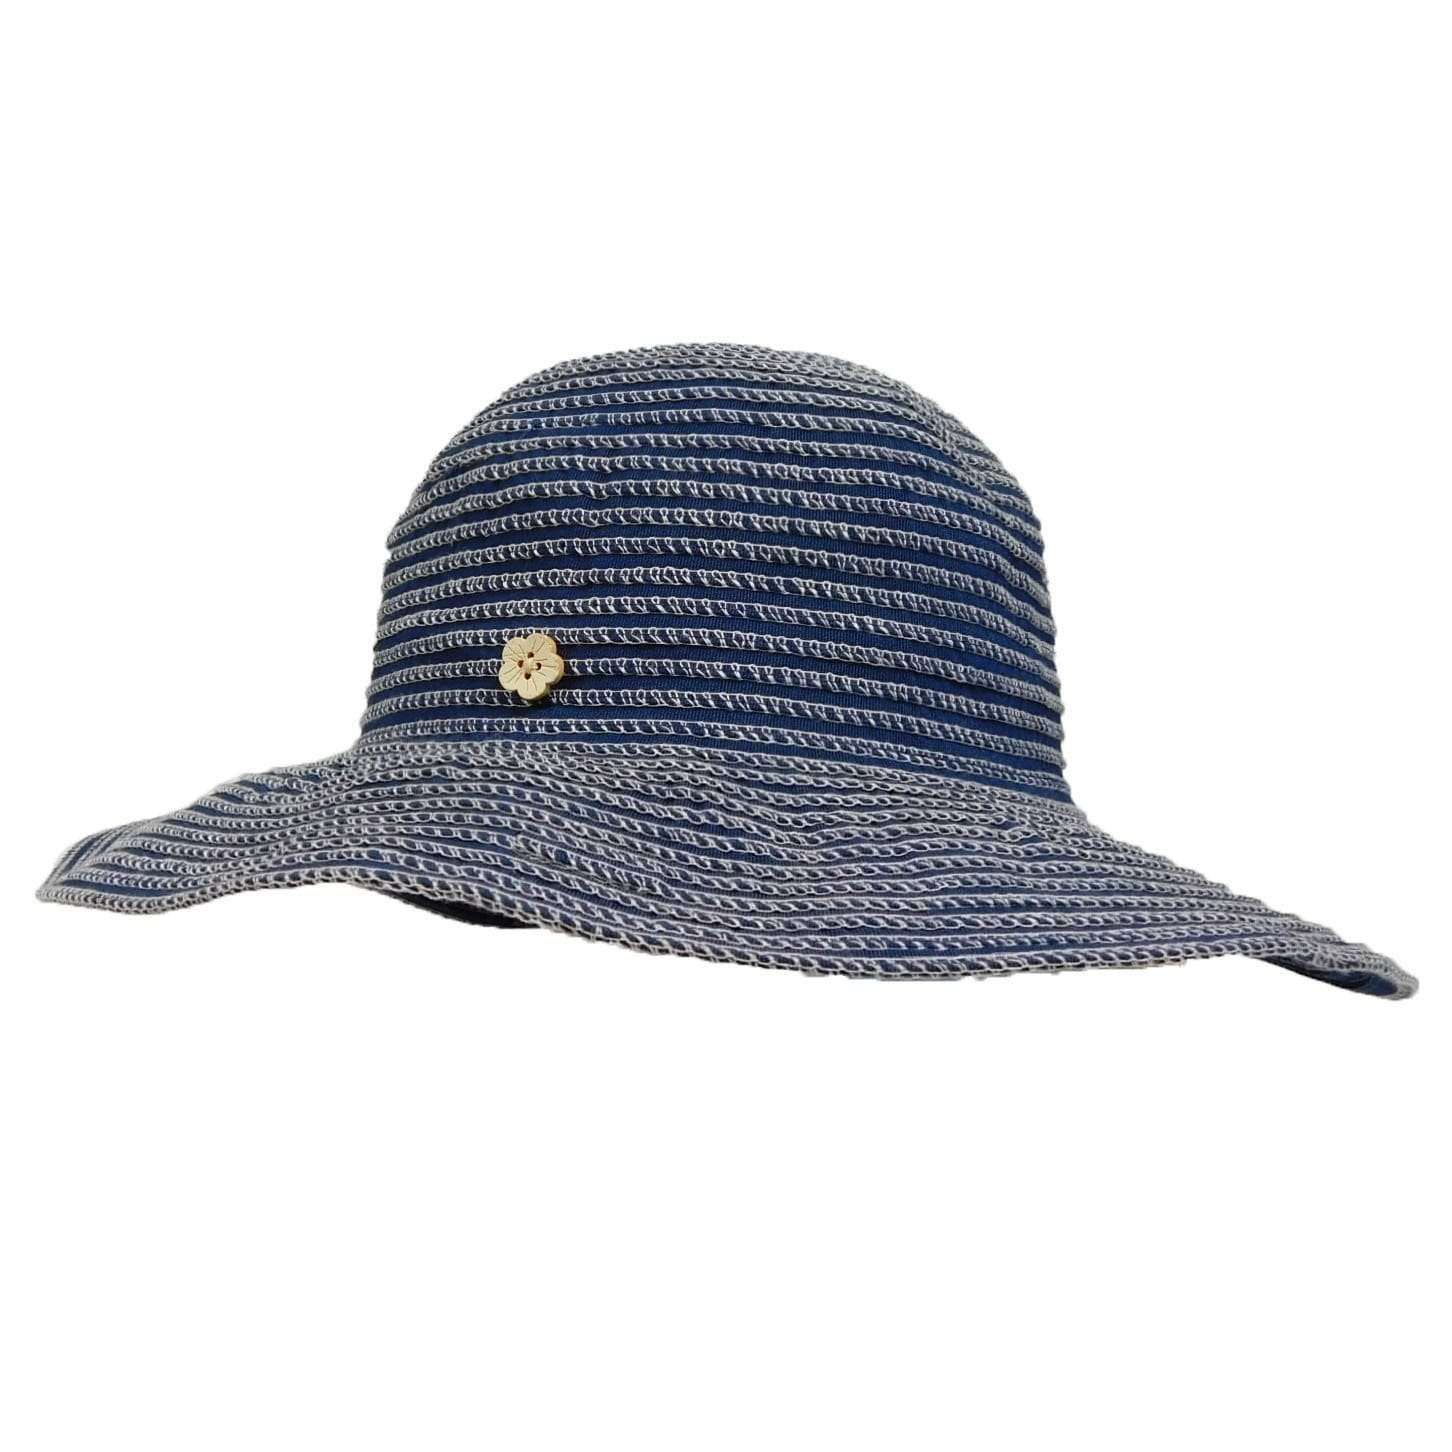 Ribbon Sun Hat with Flower Button - Boardwalk Style Wide Brim Hat Boardwalk Style Hats da773NV Navy Medium (57 cm) 